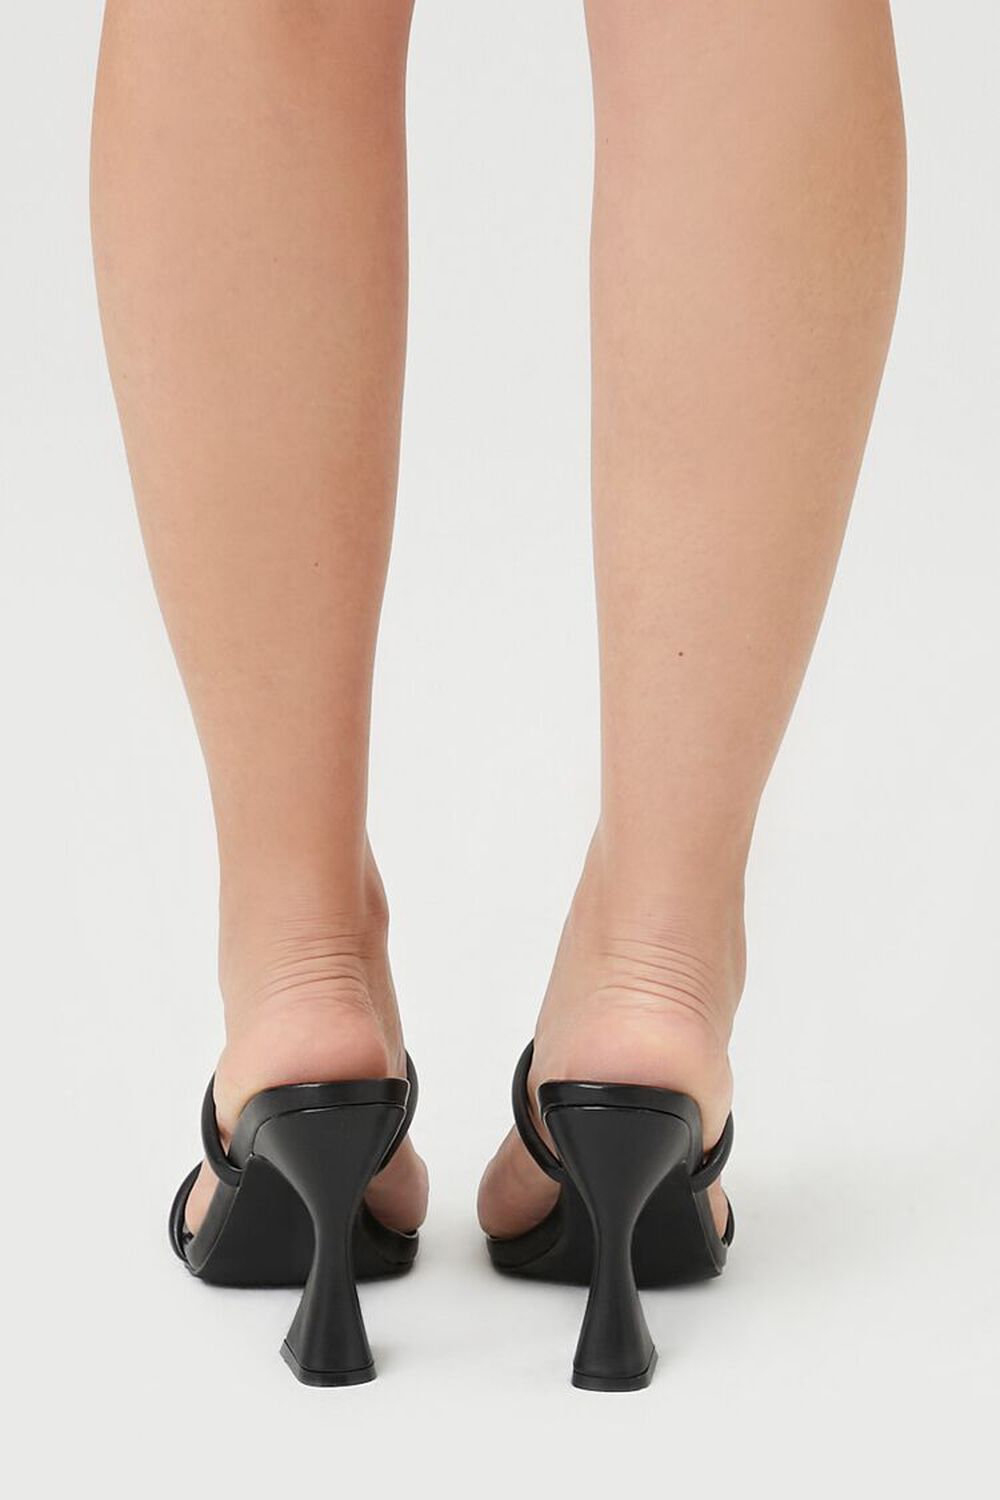 BLACK Dual-Strap Spool Heels, image 3